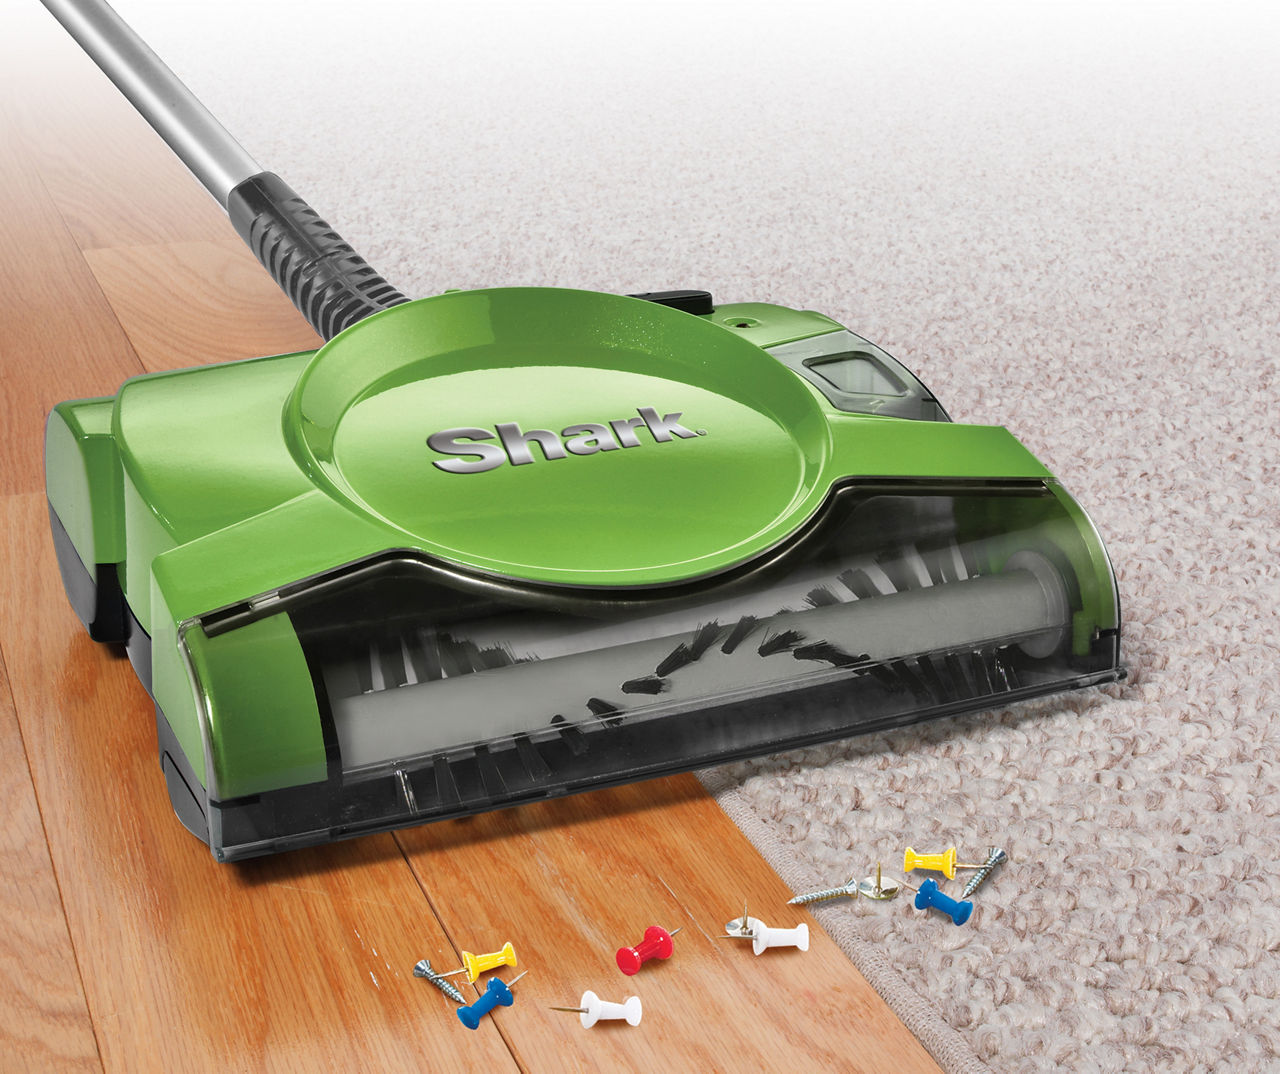 Shark 12 Rechargeable Floor & Carpet Sweeper, V2945Z - Walmart